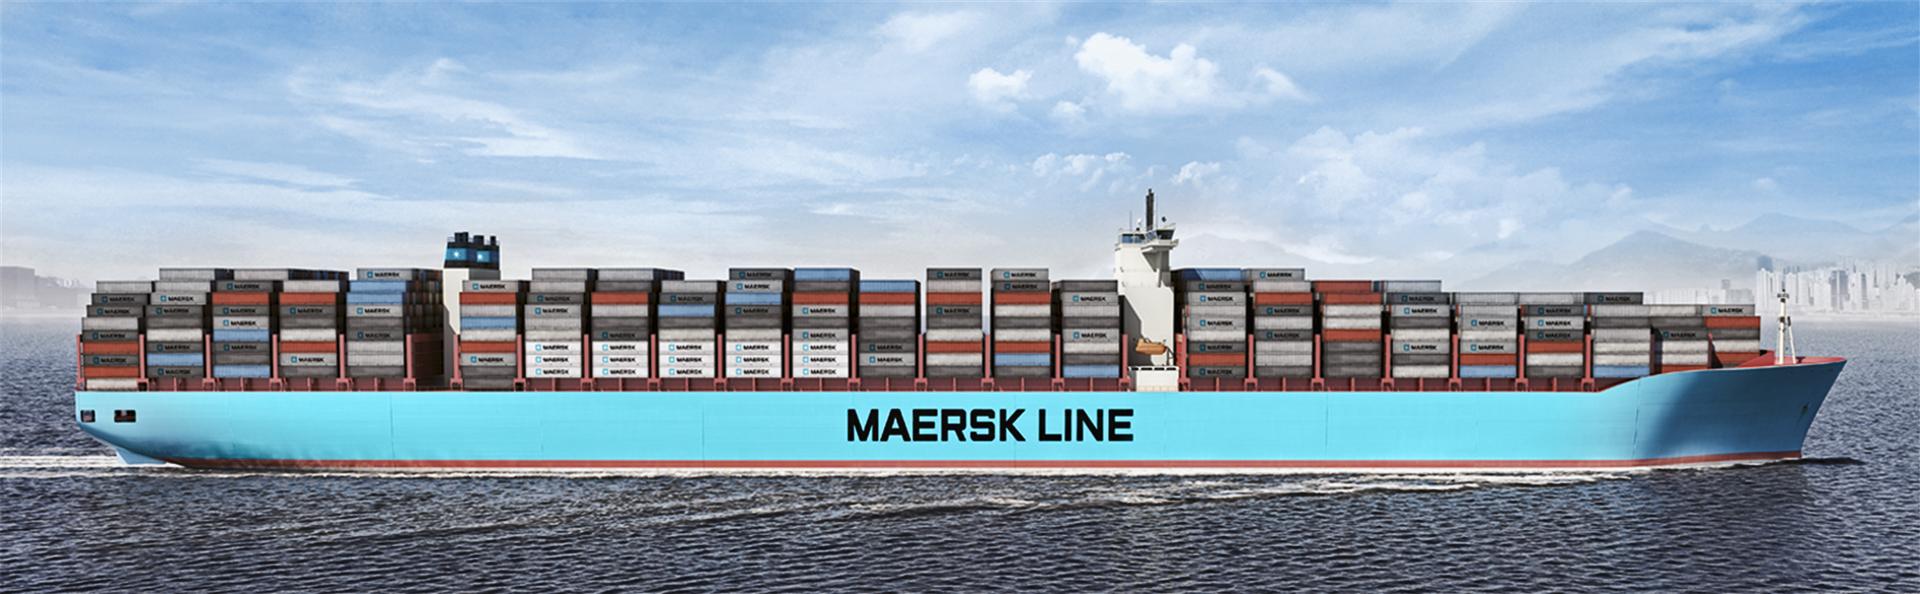 Maersk-Triple-E